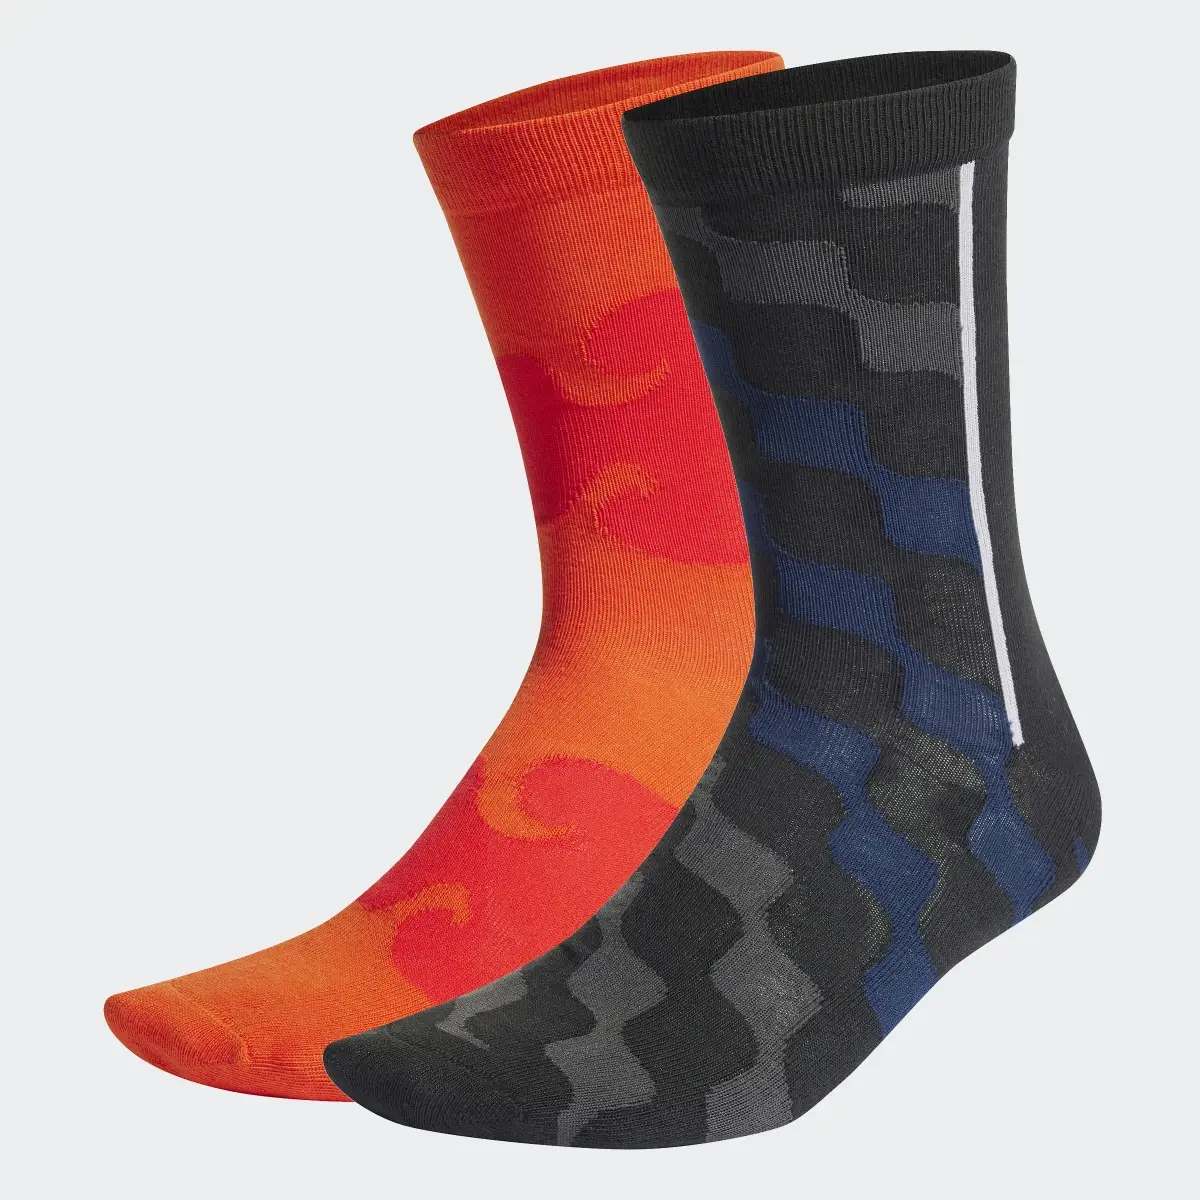 Adidas Marimekko Socks 2 Pairs. 2